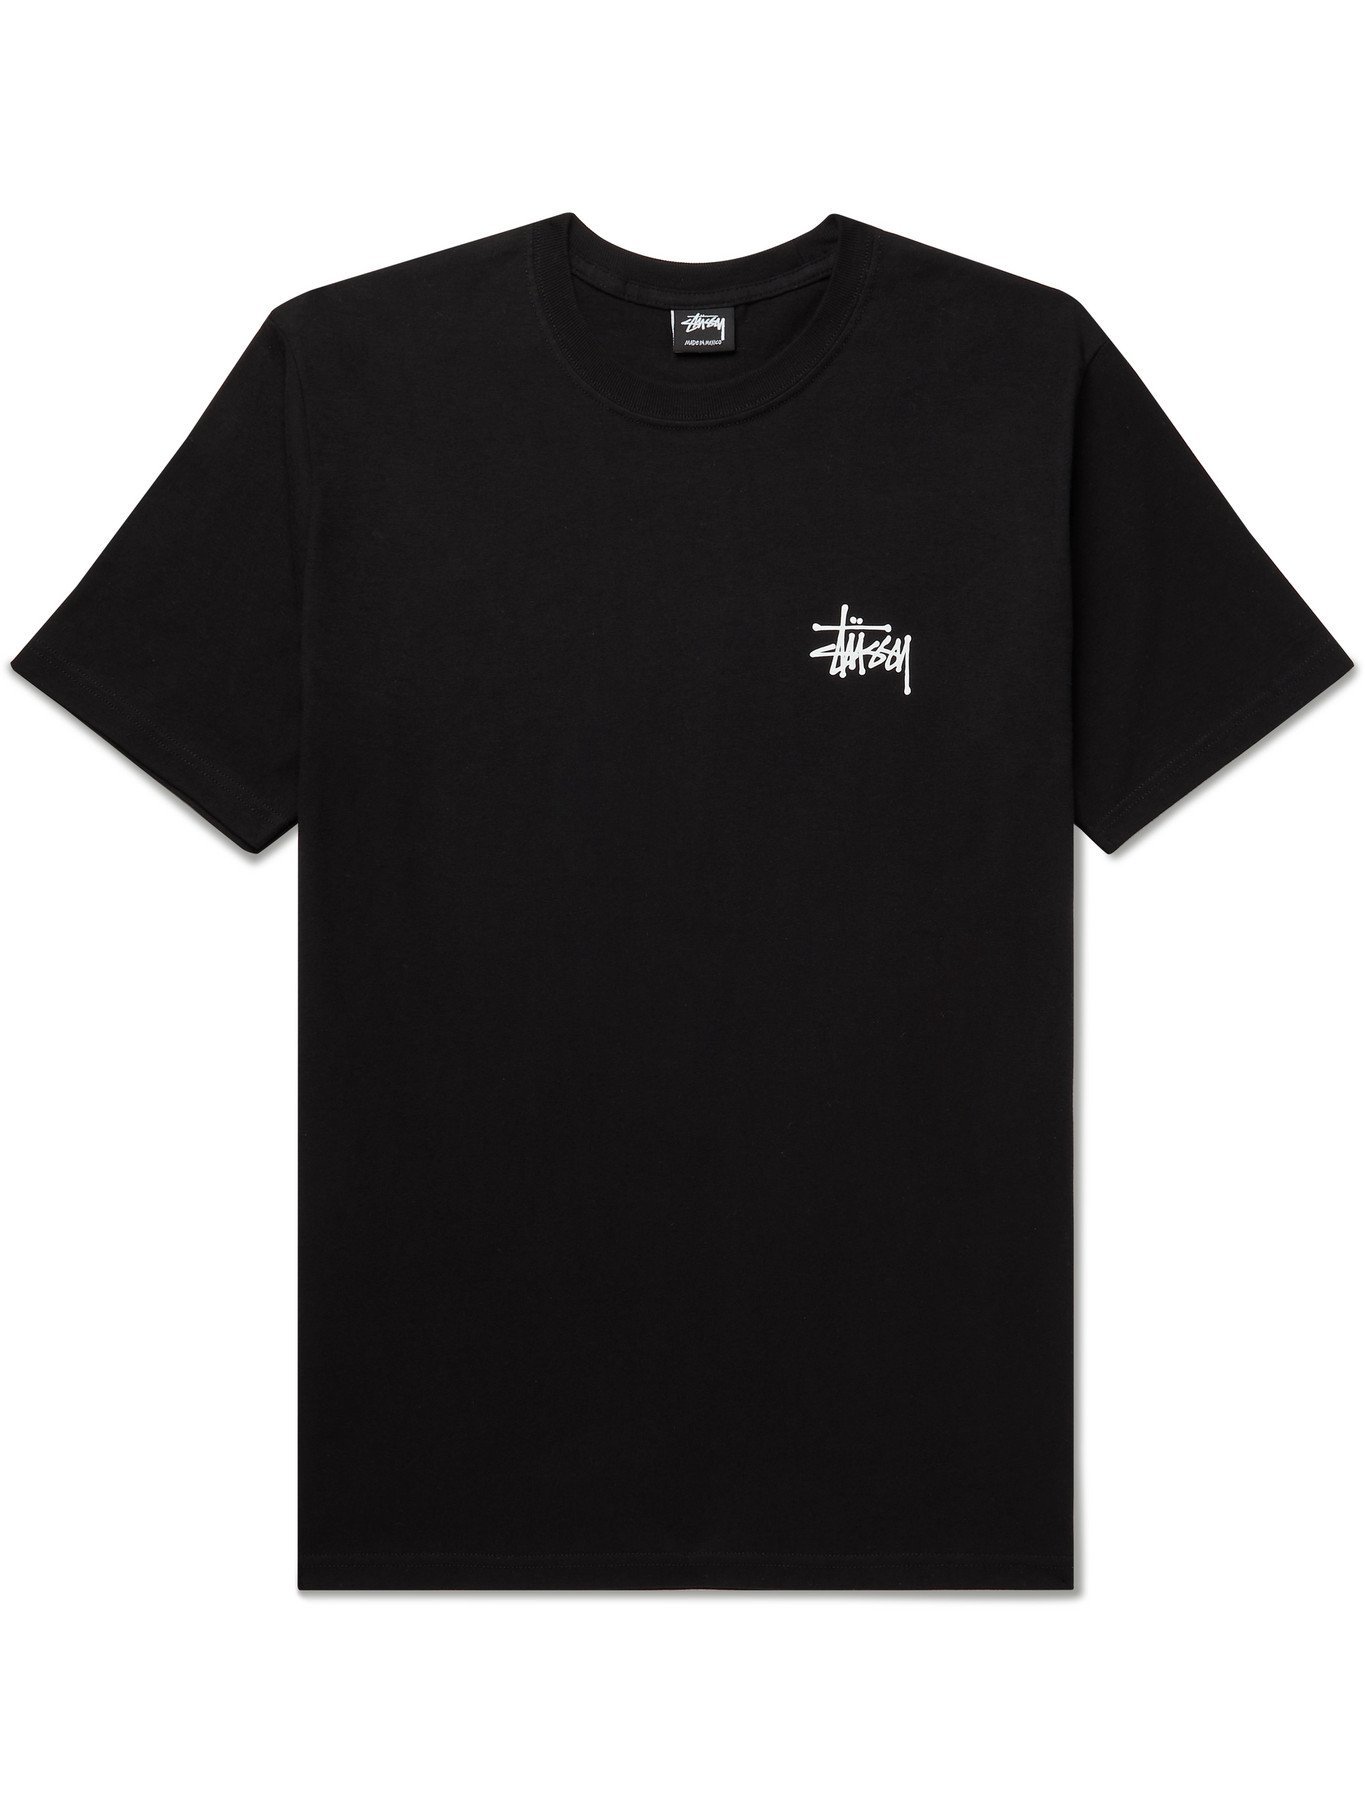 STÜSSY - Logo-Print Cotton-Jersey T-Shirt - Black - M Stussy